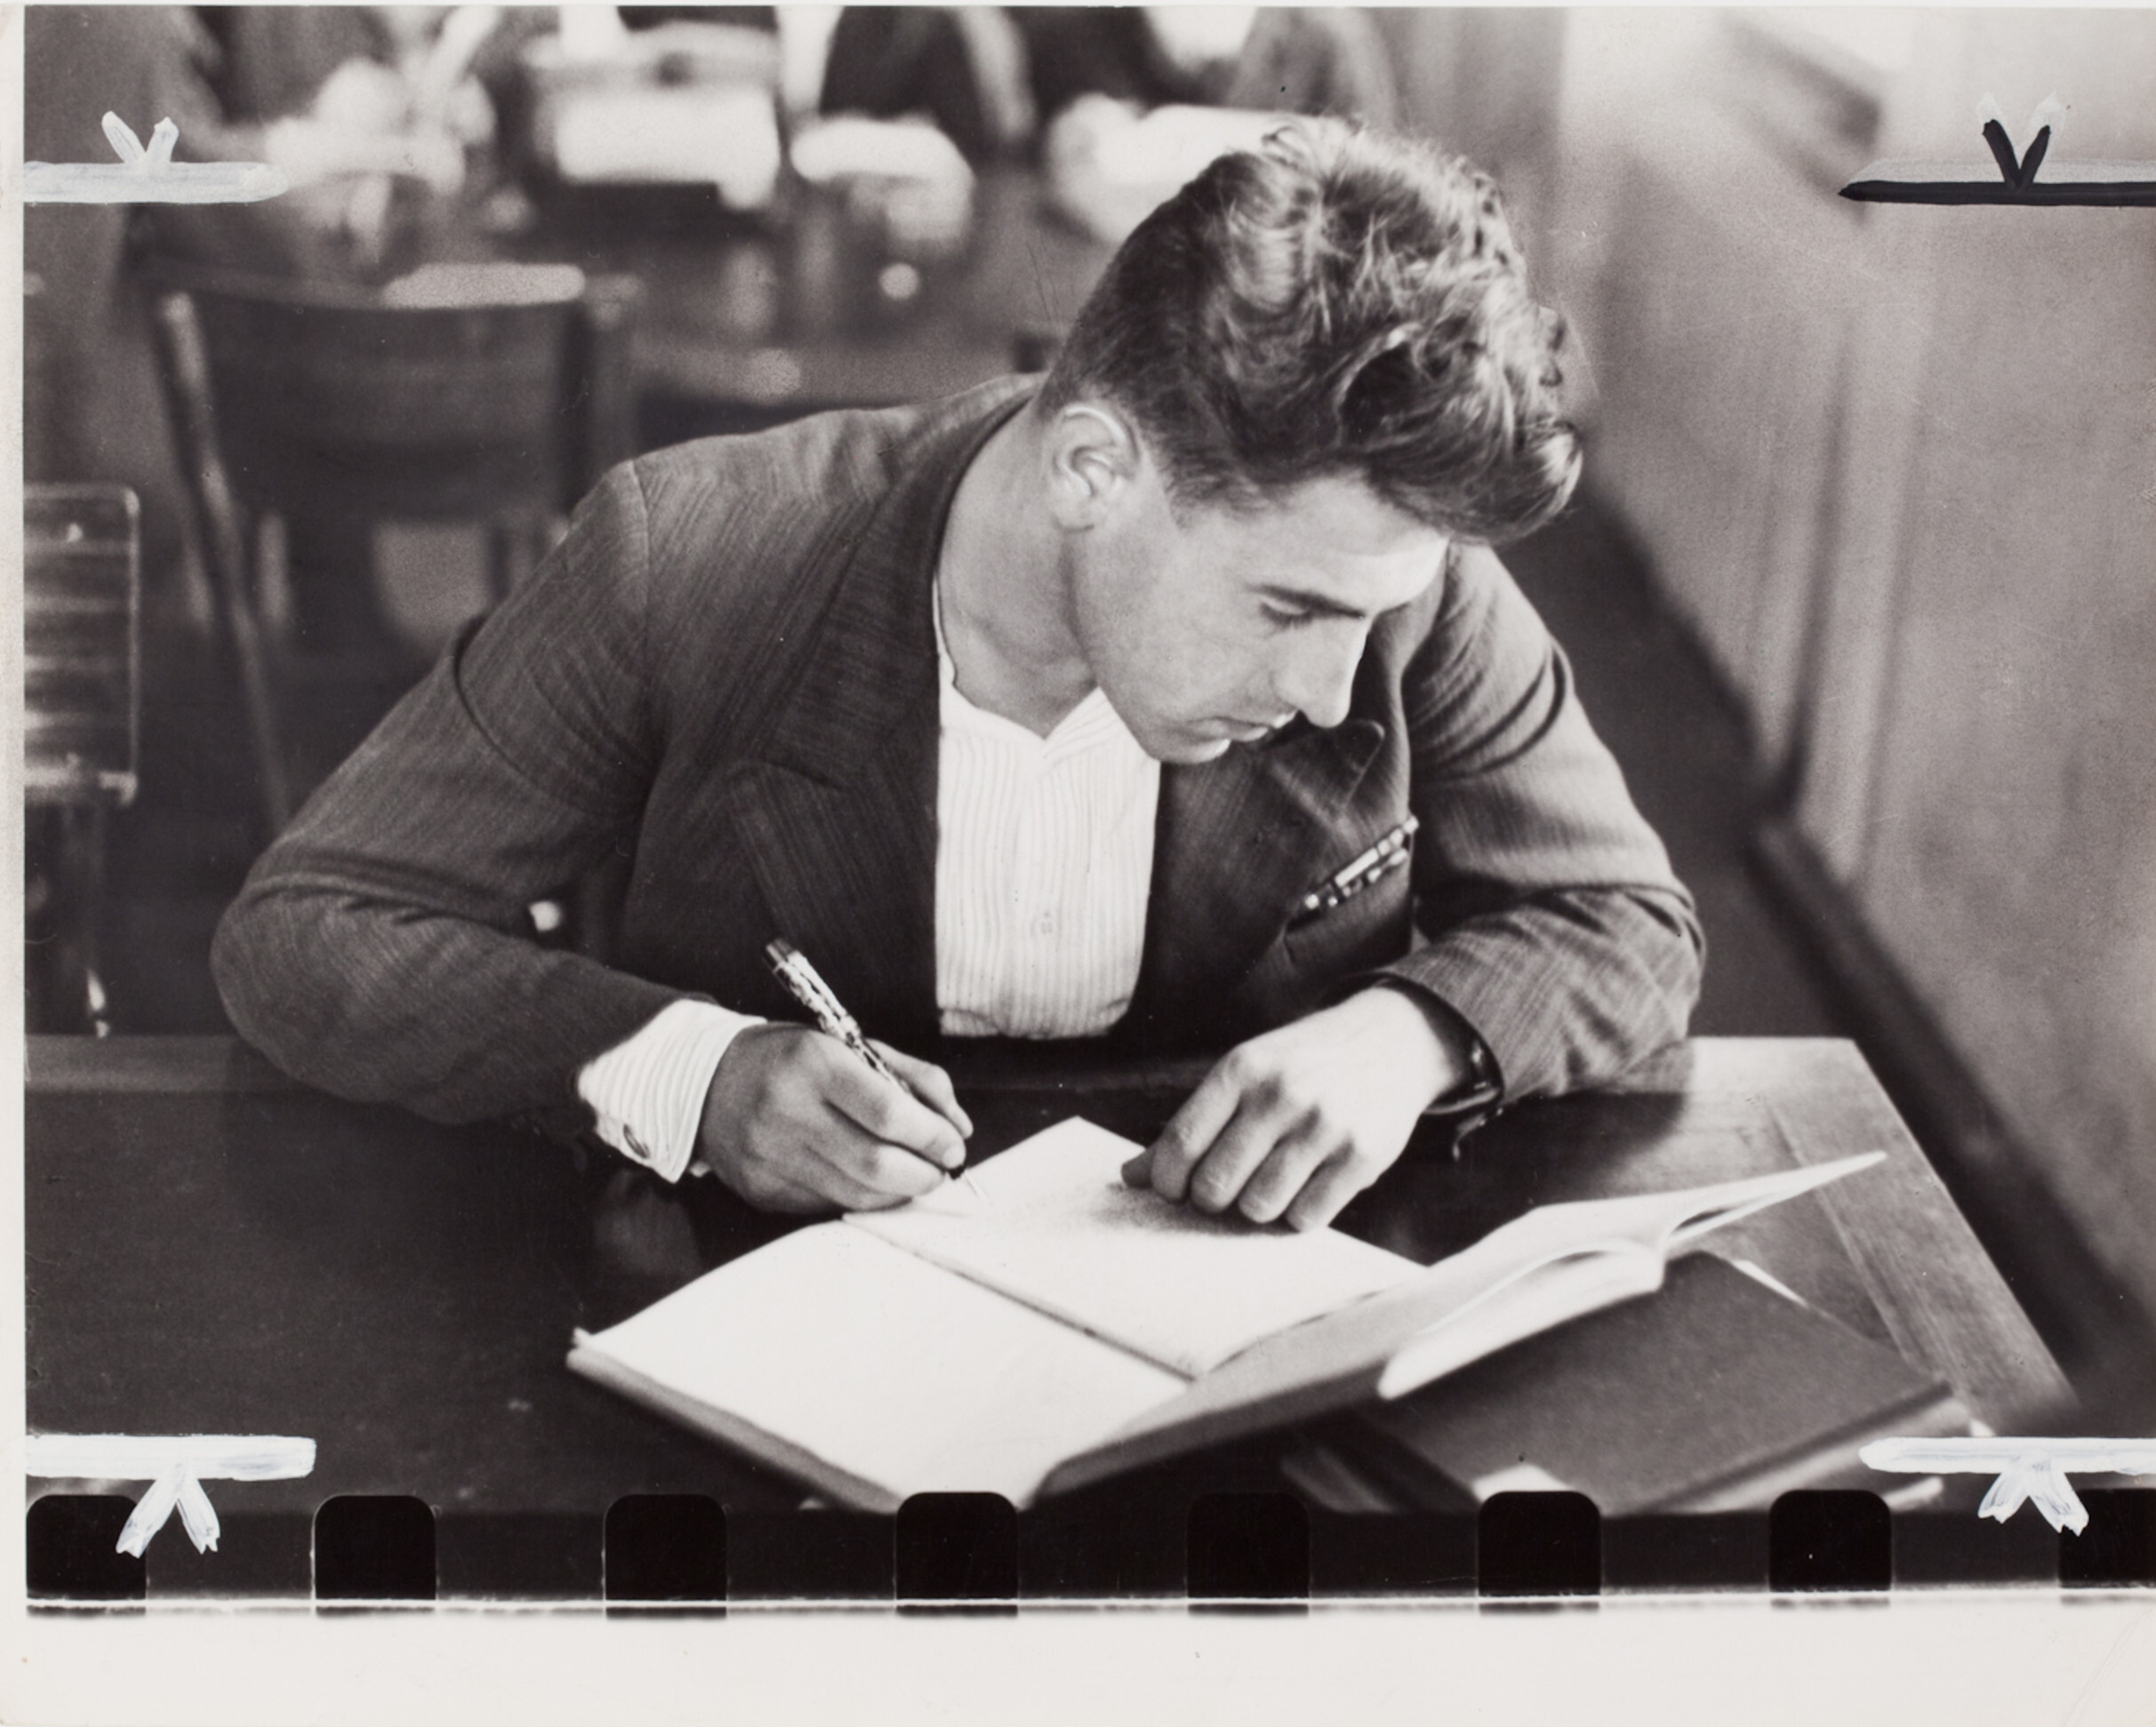 Мужчина занимается в библиотеке, Москва, 1947 год. Фотограф Роберт Капа